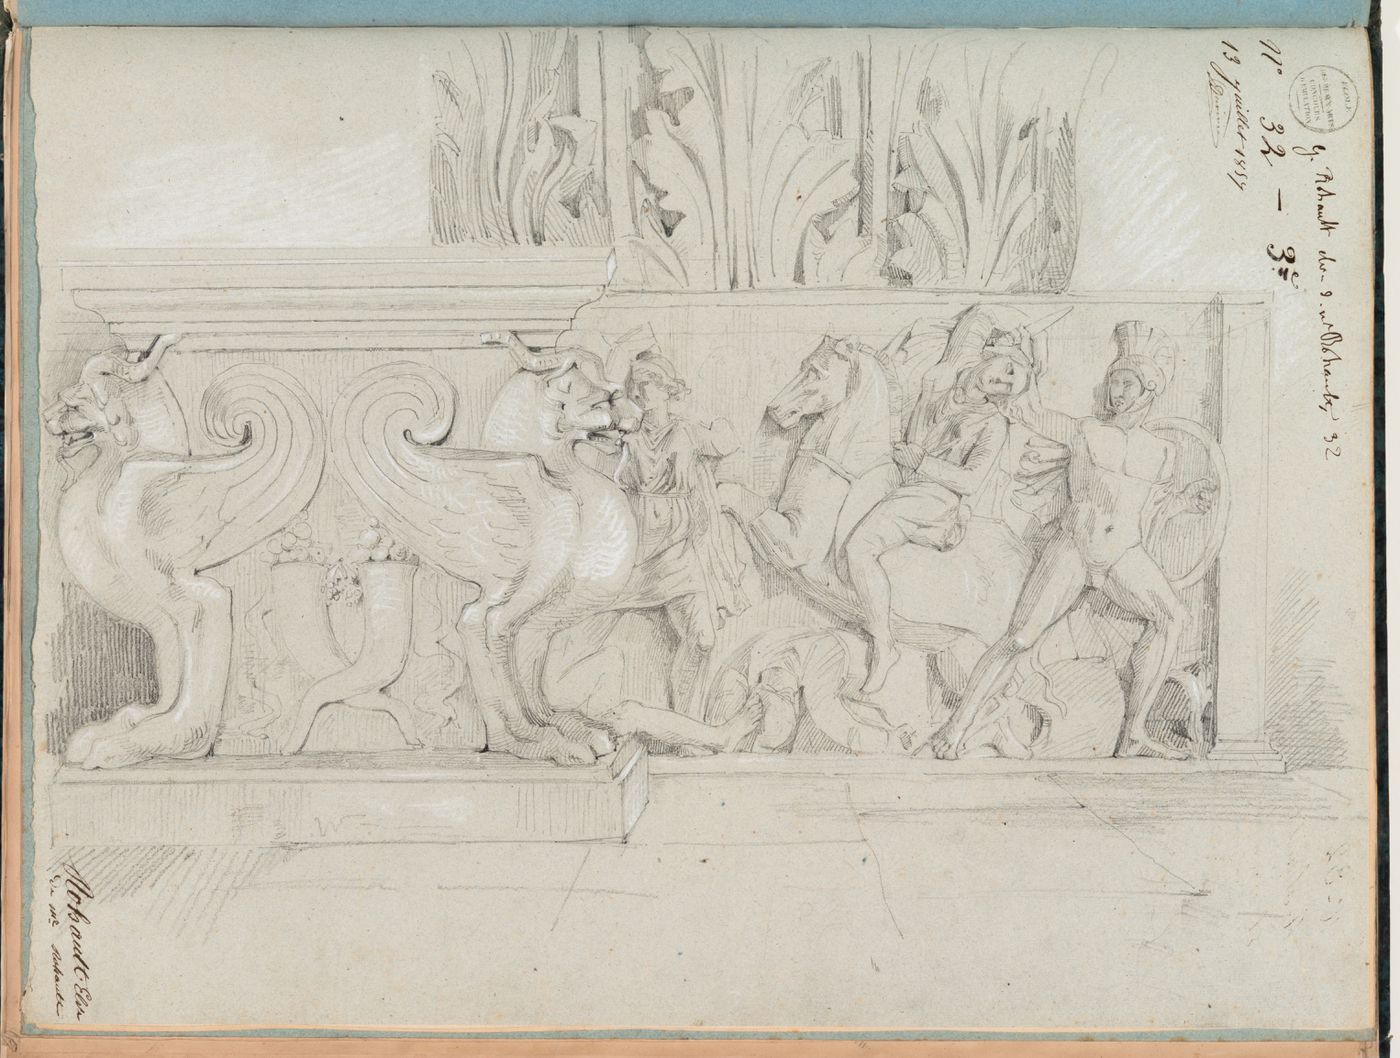 Concours d'émulation entry, 13 July 1857: Study of two sculpted pedestals